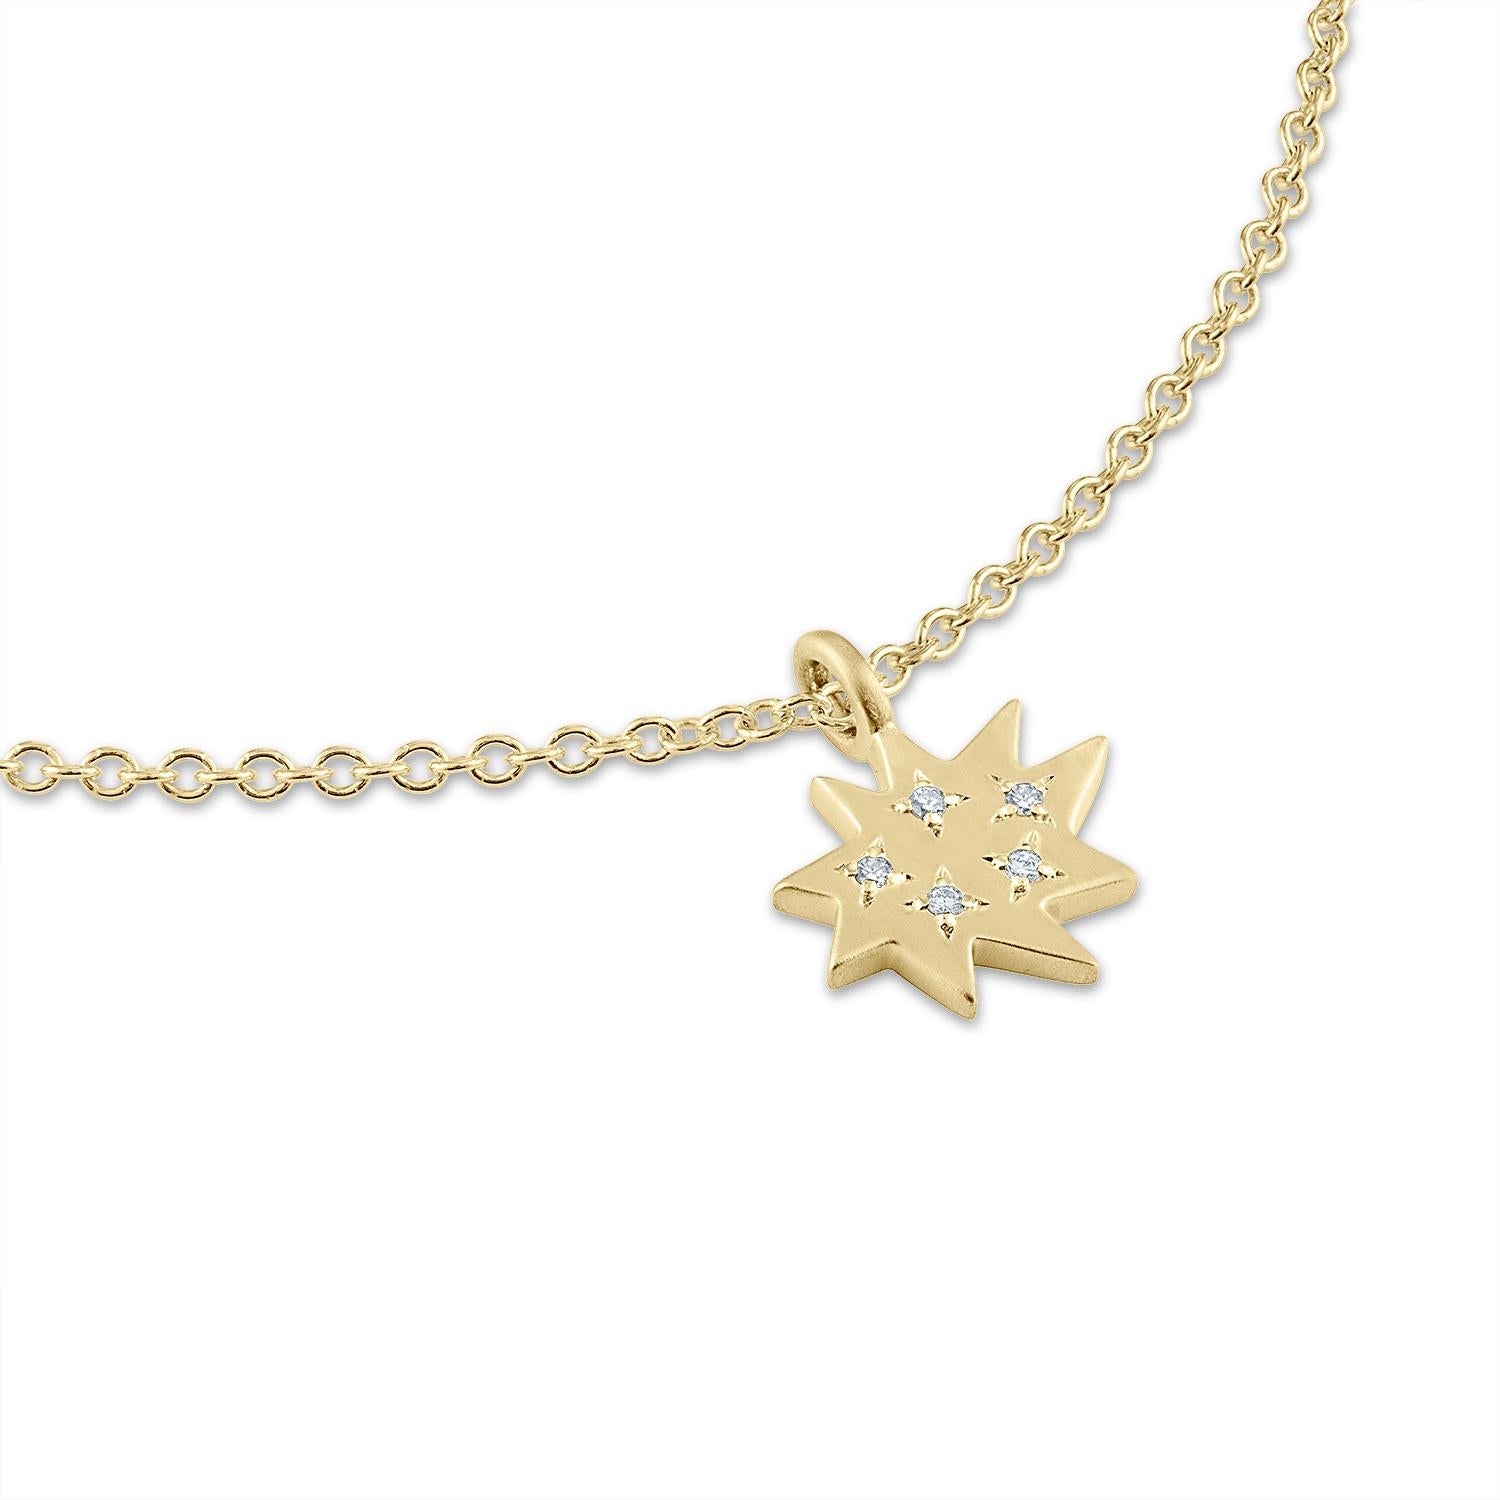 Contemporary Emily Kuvin Mini Stella Gold and Diamond Organic Star Necklace, Alone or Layered